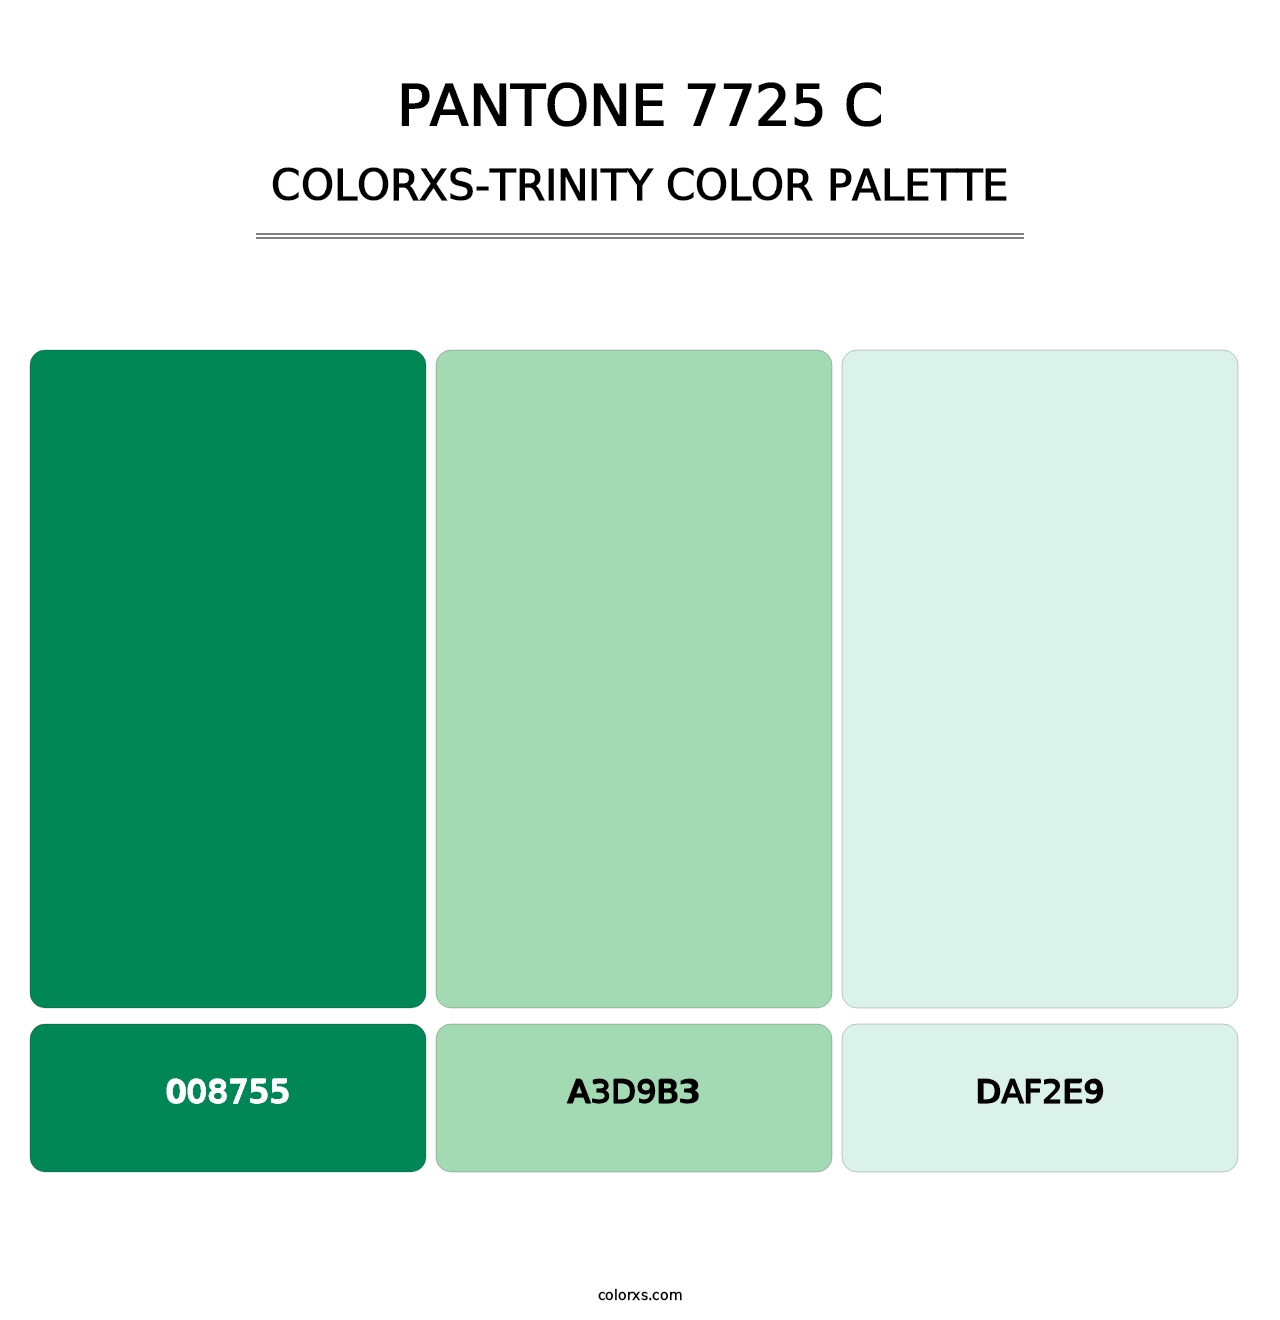 PANTONE 7725 C - Colorxs Trinity Palette